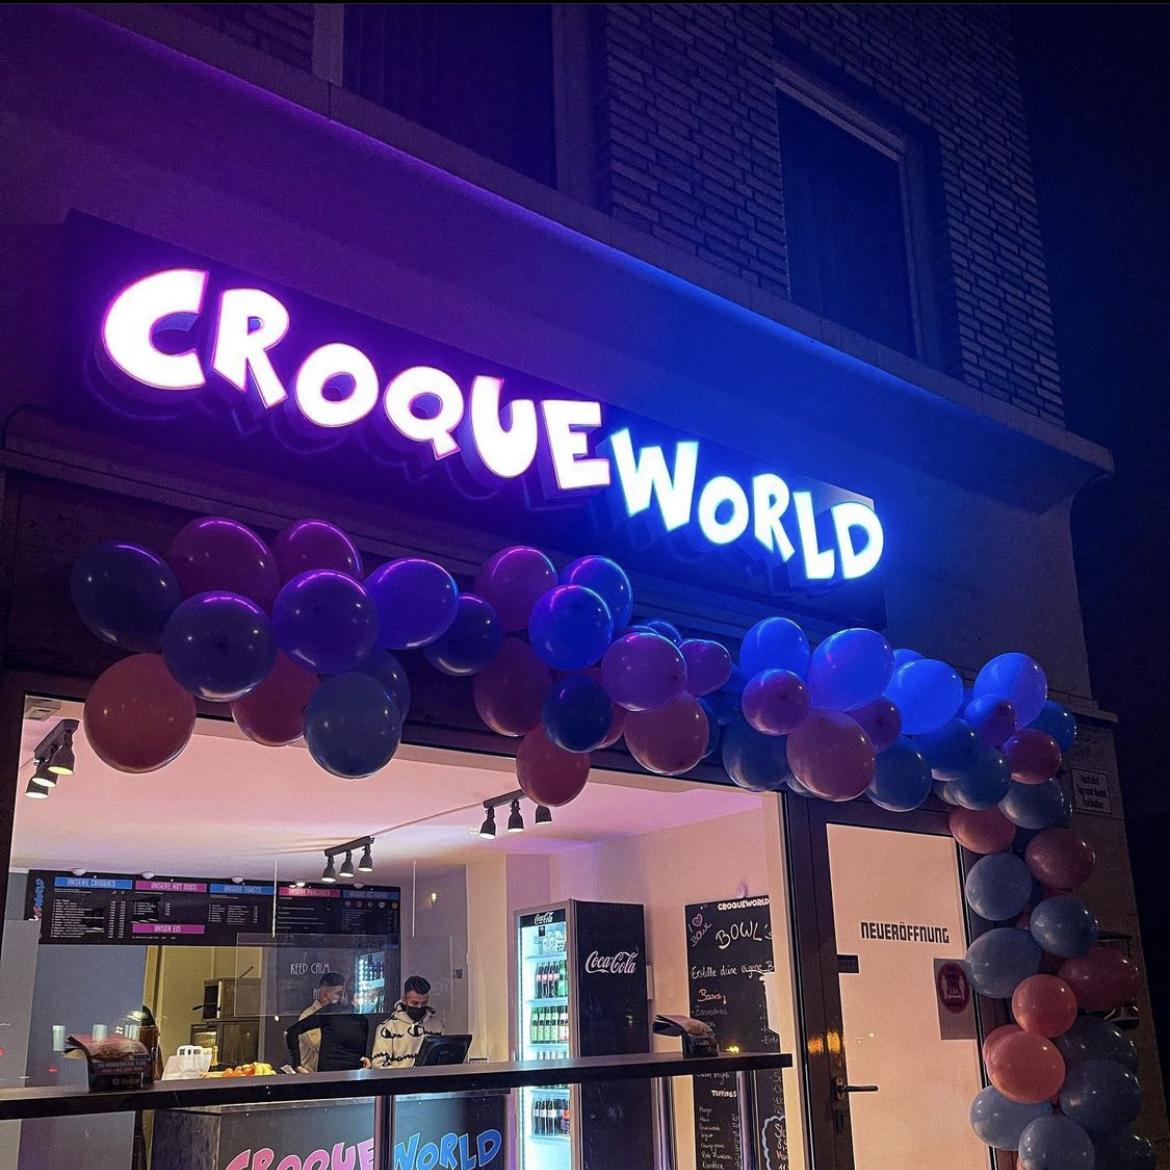 Restaurant "Croqueworld" in Hamburg